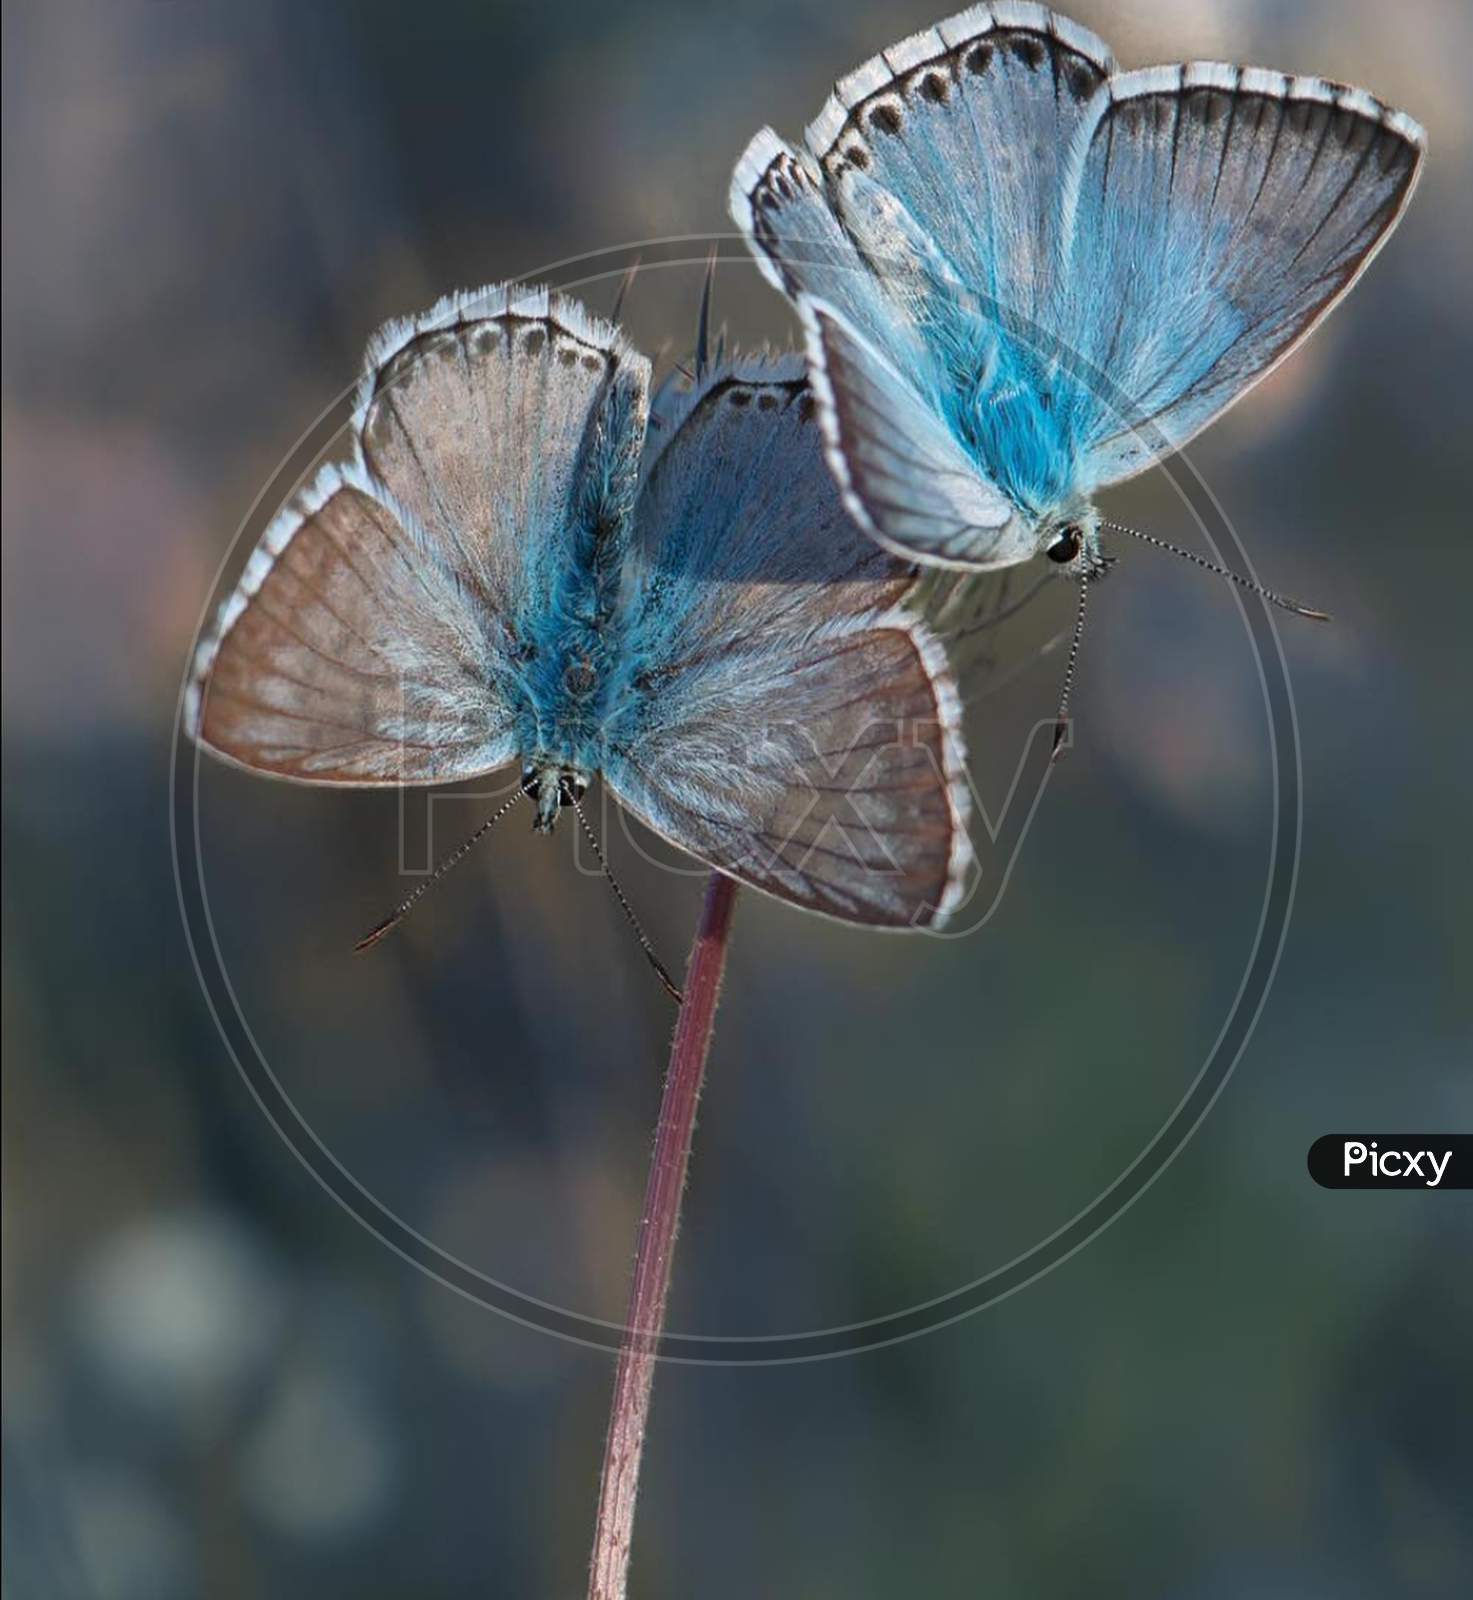 Insect×Remove  Phengaris×Remove  Lycaenid×Remove  Moths and butterflies×Remove  Butterfly×Remove  Plebejus×Remove  Invertebrate×Remove  Chalkhill blue×Remove  Polyommatus×Remove  Common blue×Remove